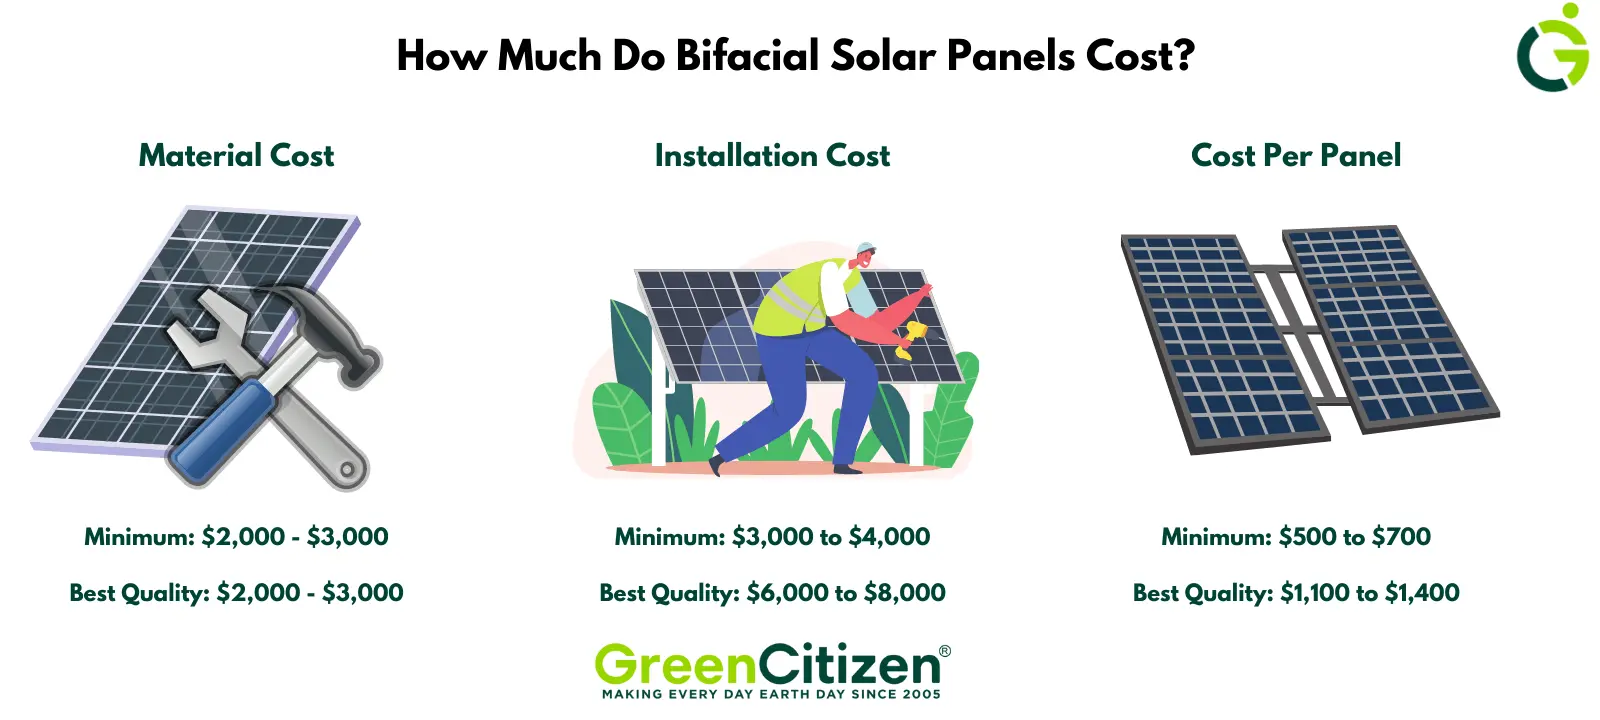 best bifacial solar panels - What is the best angle for bifacial solar panels